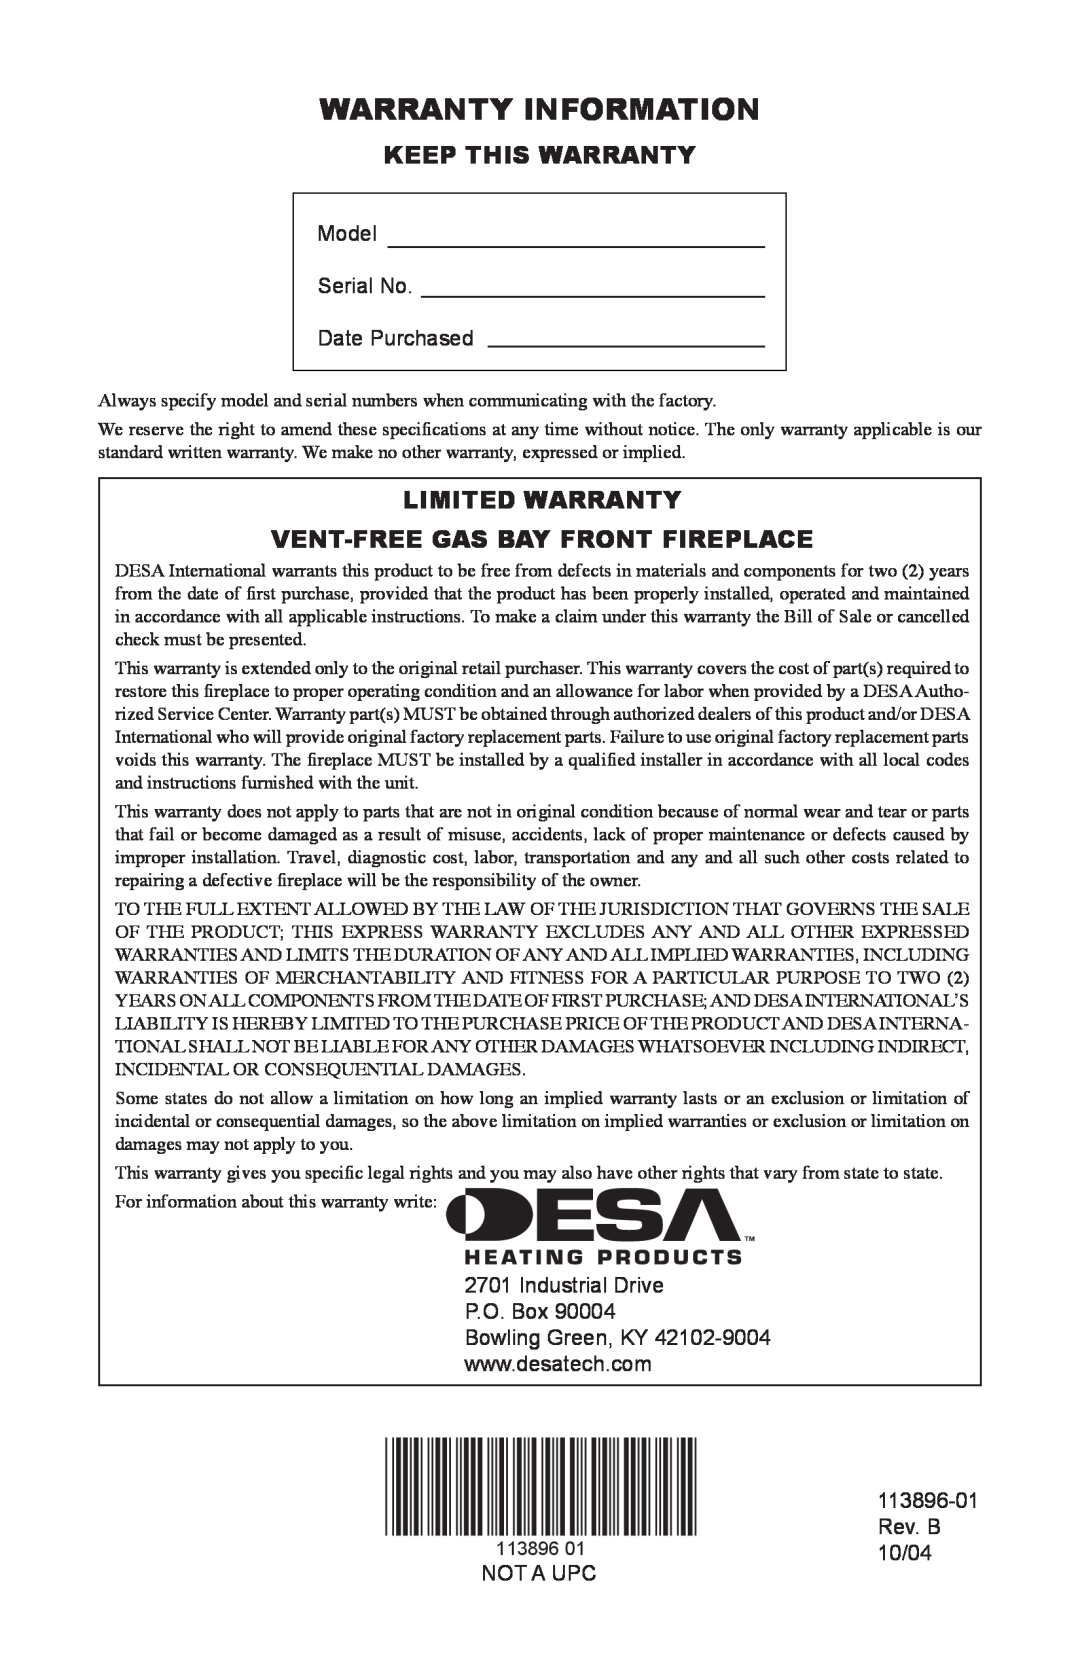 Desa CF26NTA Warranty Information, Keep This Warranty, Limited Warranty Vent-Freegas Bay Front Fireplace 